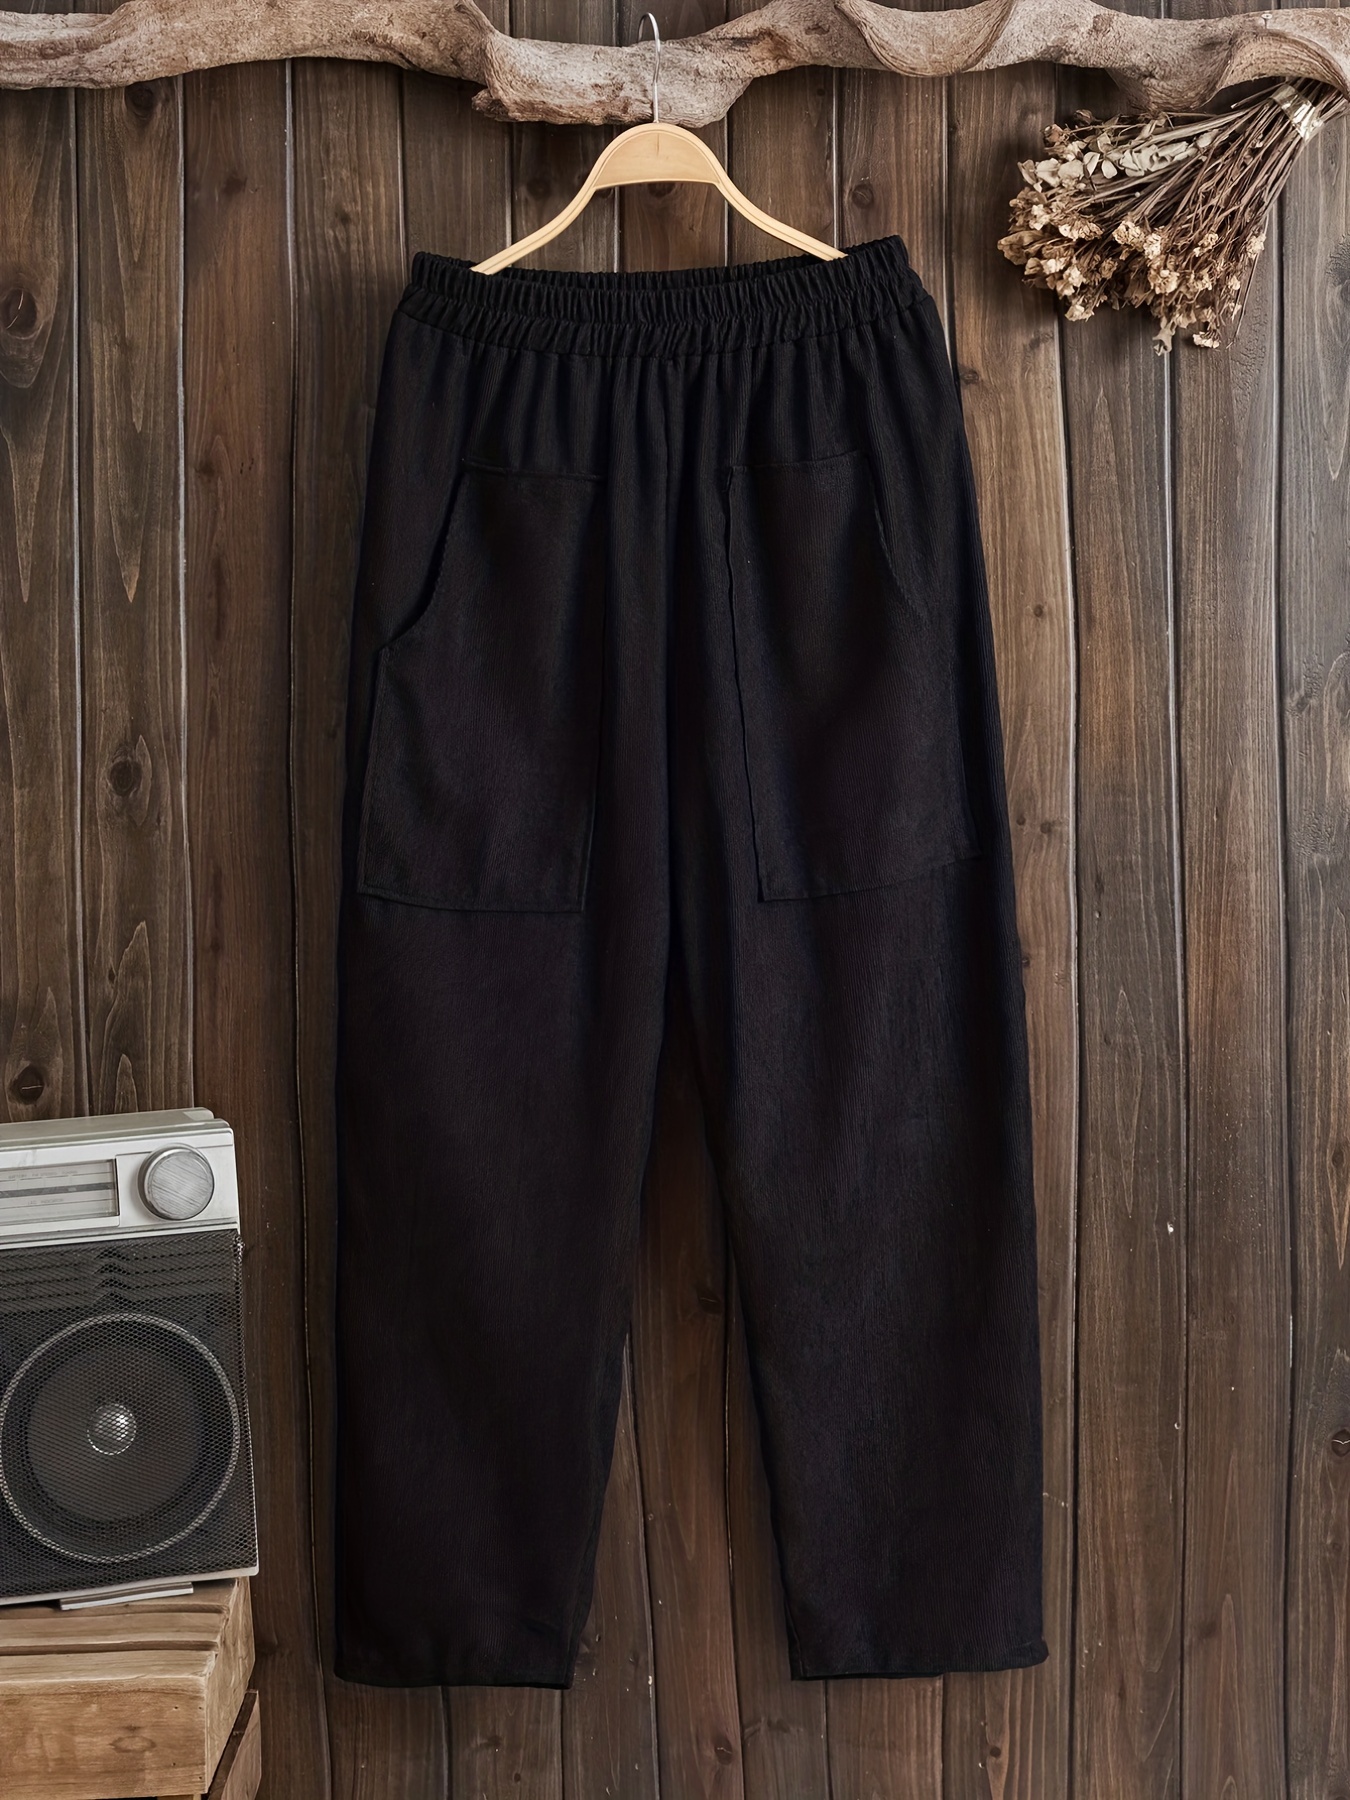 slant pockets harem pants casual loose pants for spring summer womens clothing details 16